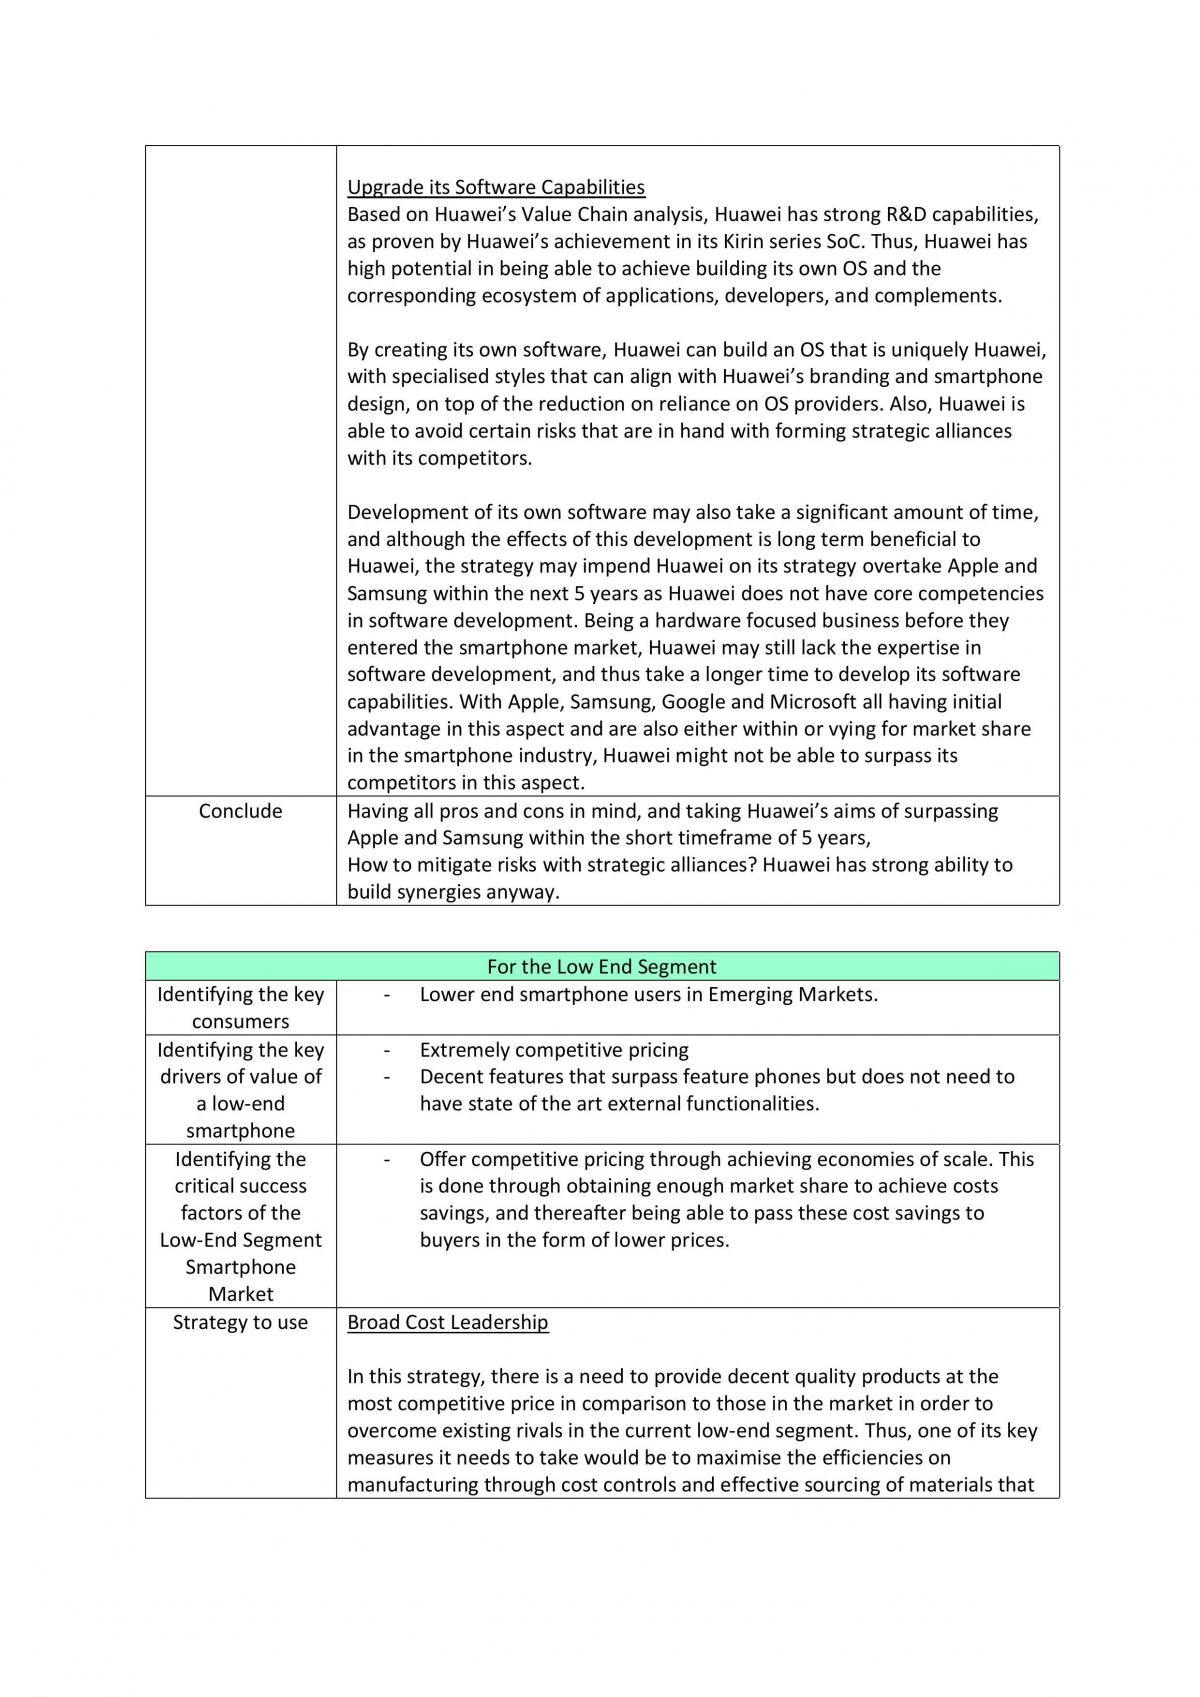 AB3601 Strategic Management Case Study Sample - Page 18